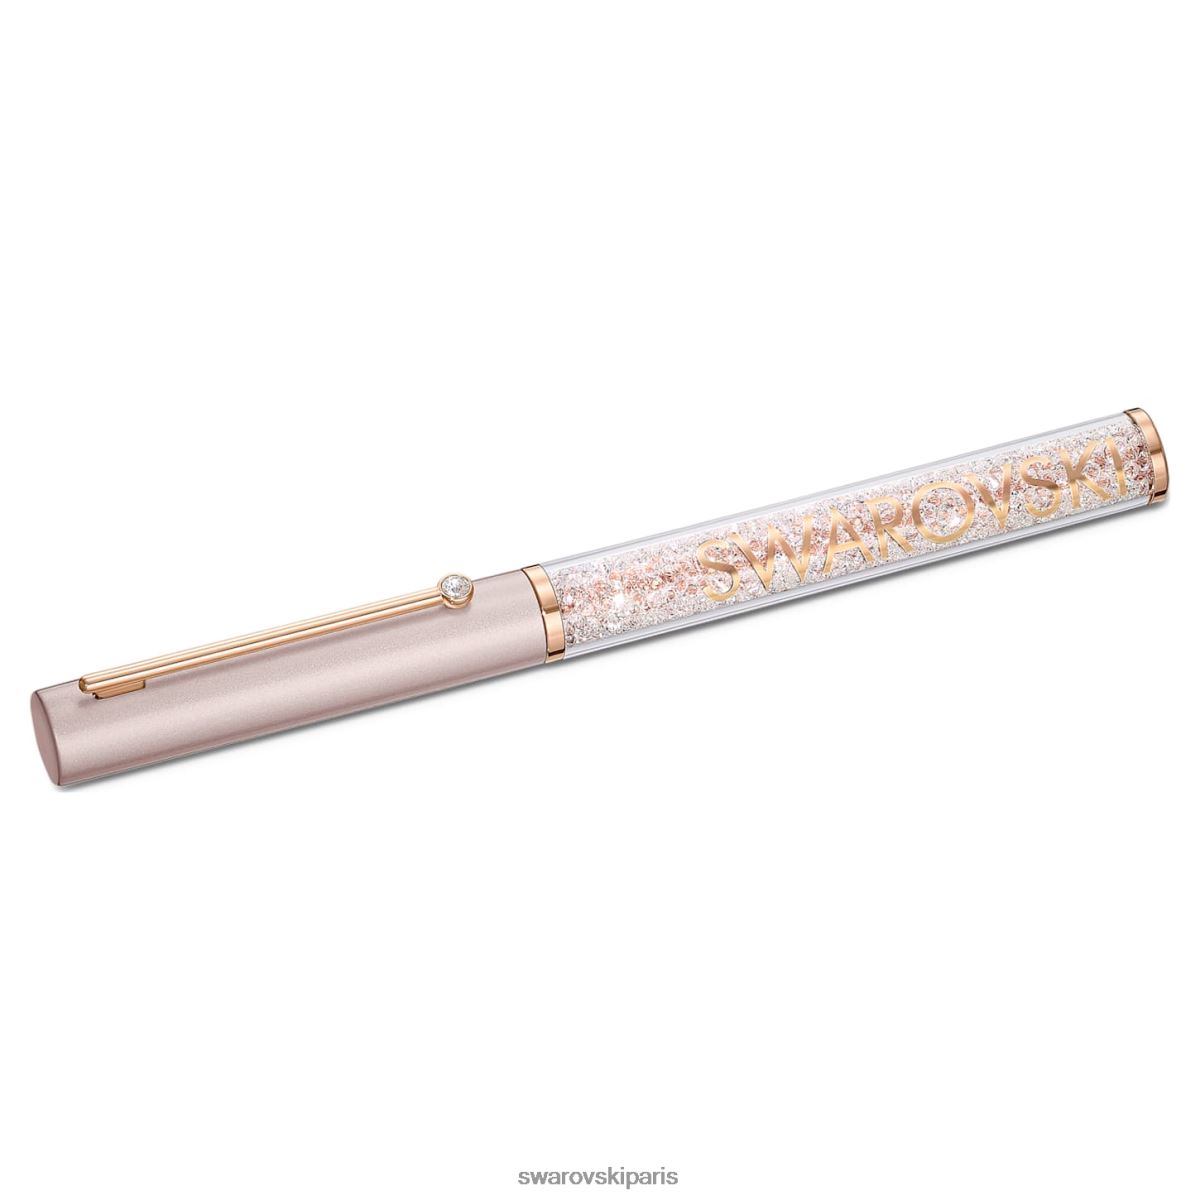 accessoires Swarovski stylo à bille brillant cristallin ton or rose, laqué rose, plaqué ton or rose RZD0XJ1283